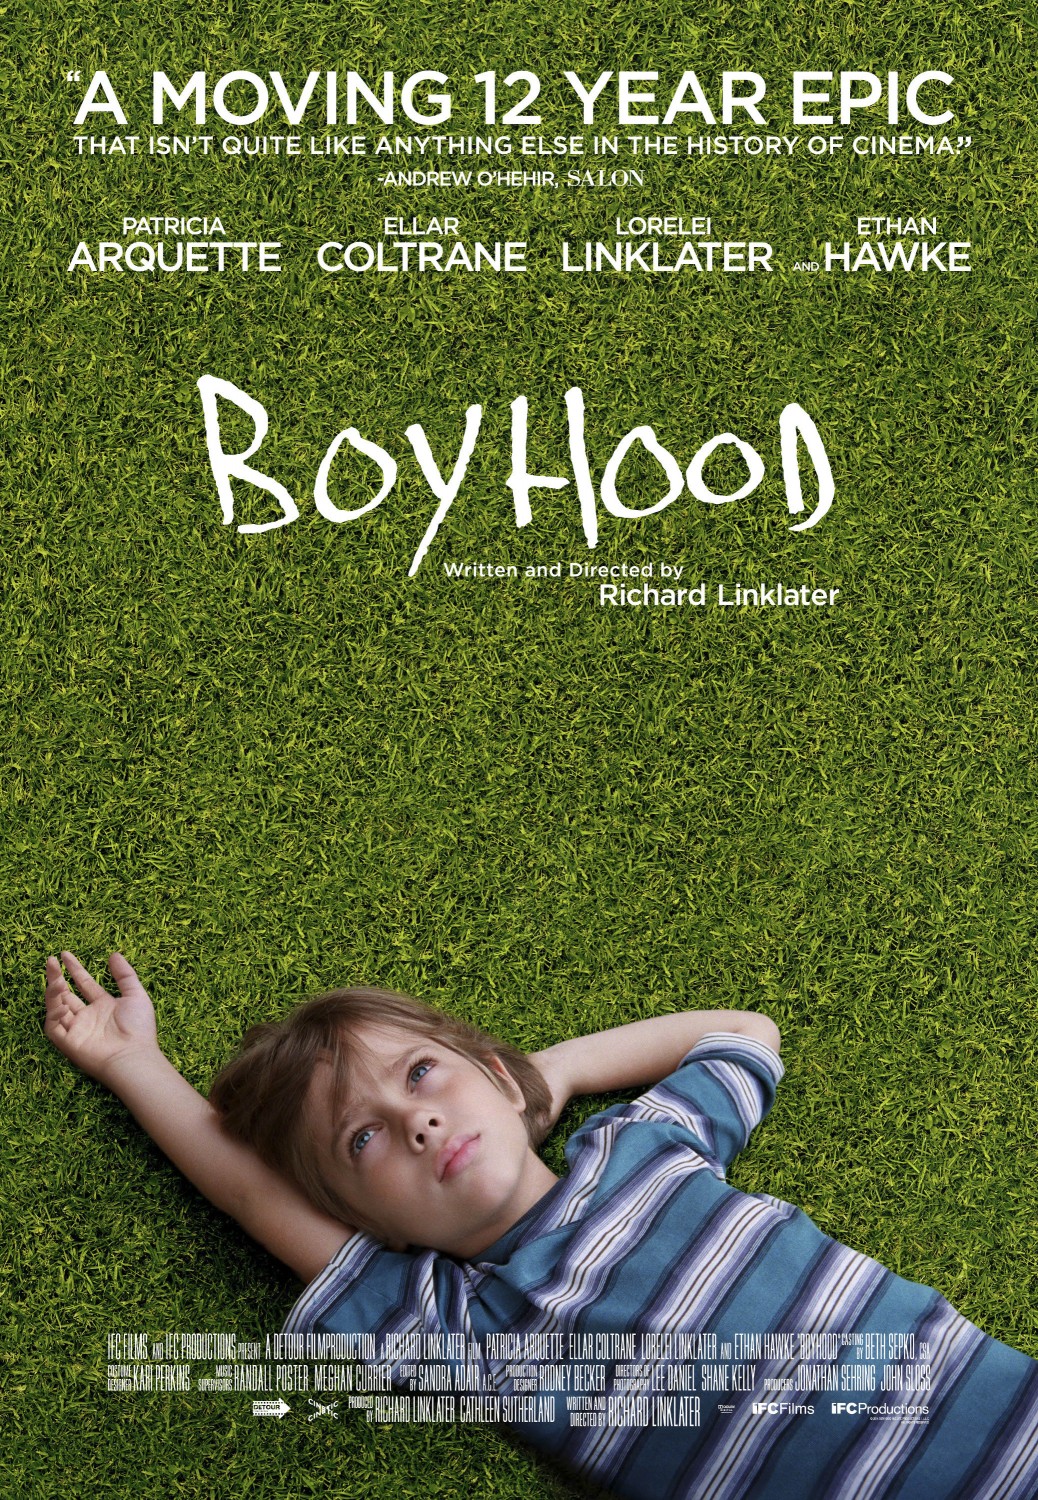 Extra Large Movie Poster Image for Boyhood 